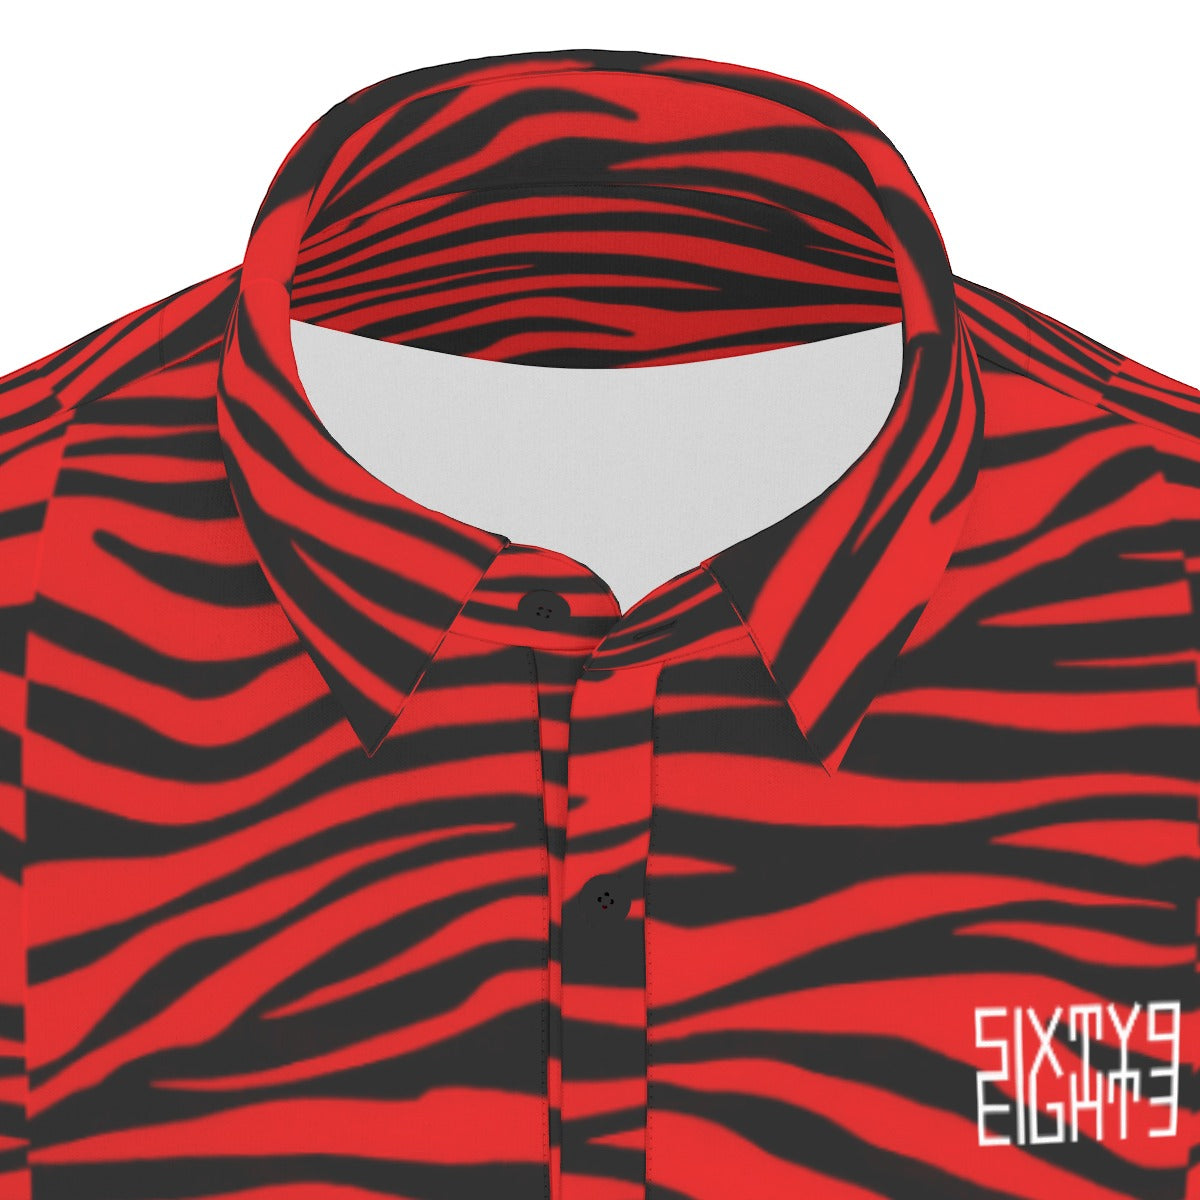 Sixty Eight 93 Logo White Zebra Red Men's Stretch Polo Shirt